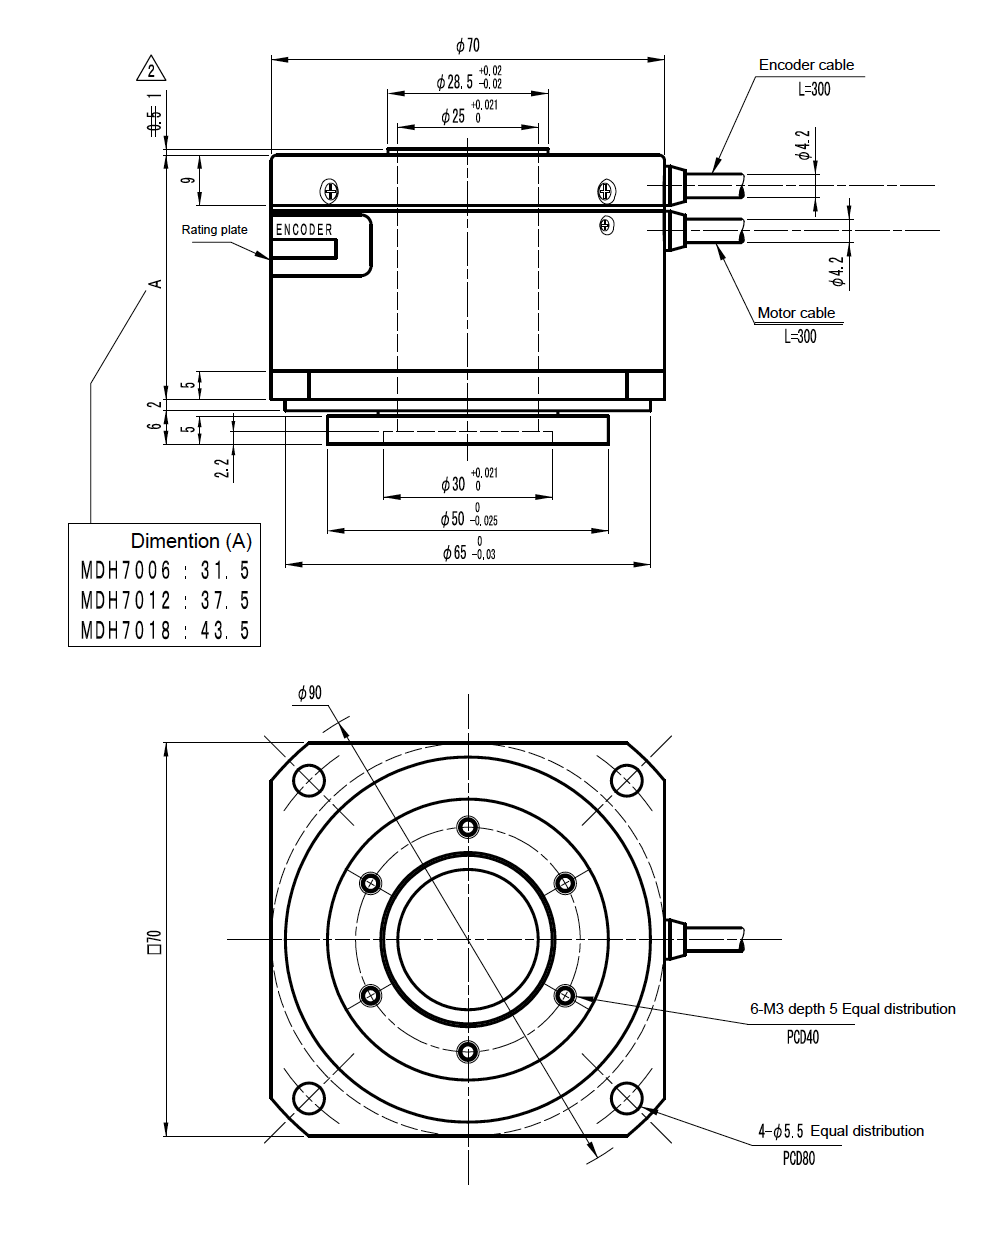 MDH-7012 system drawing